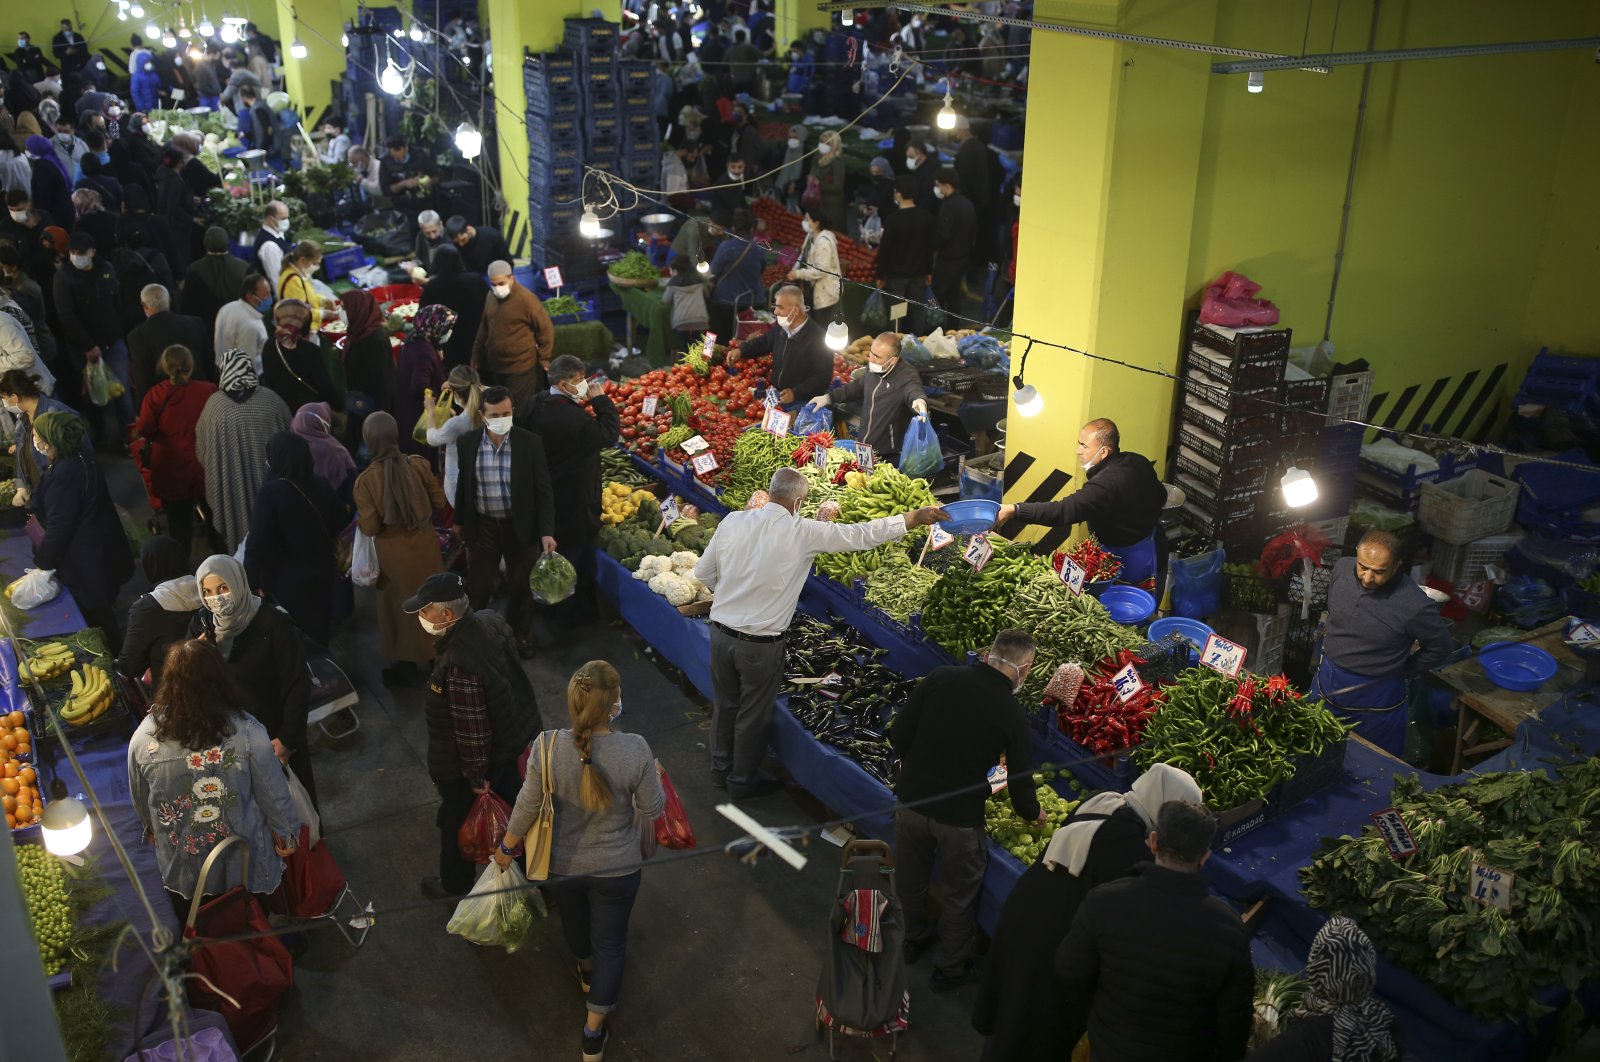 People shop in a street market in Istanbul, Turkey, April 29, 2021. (AP Photo)